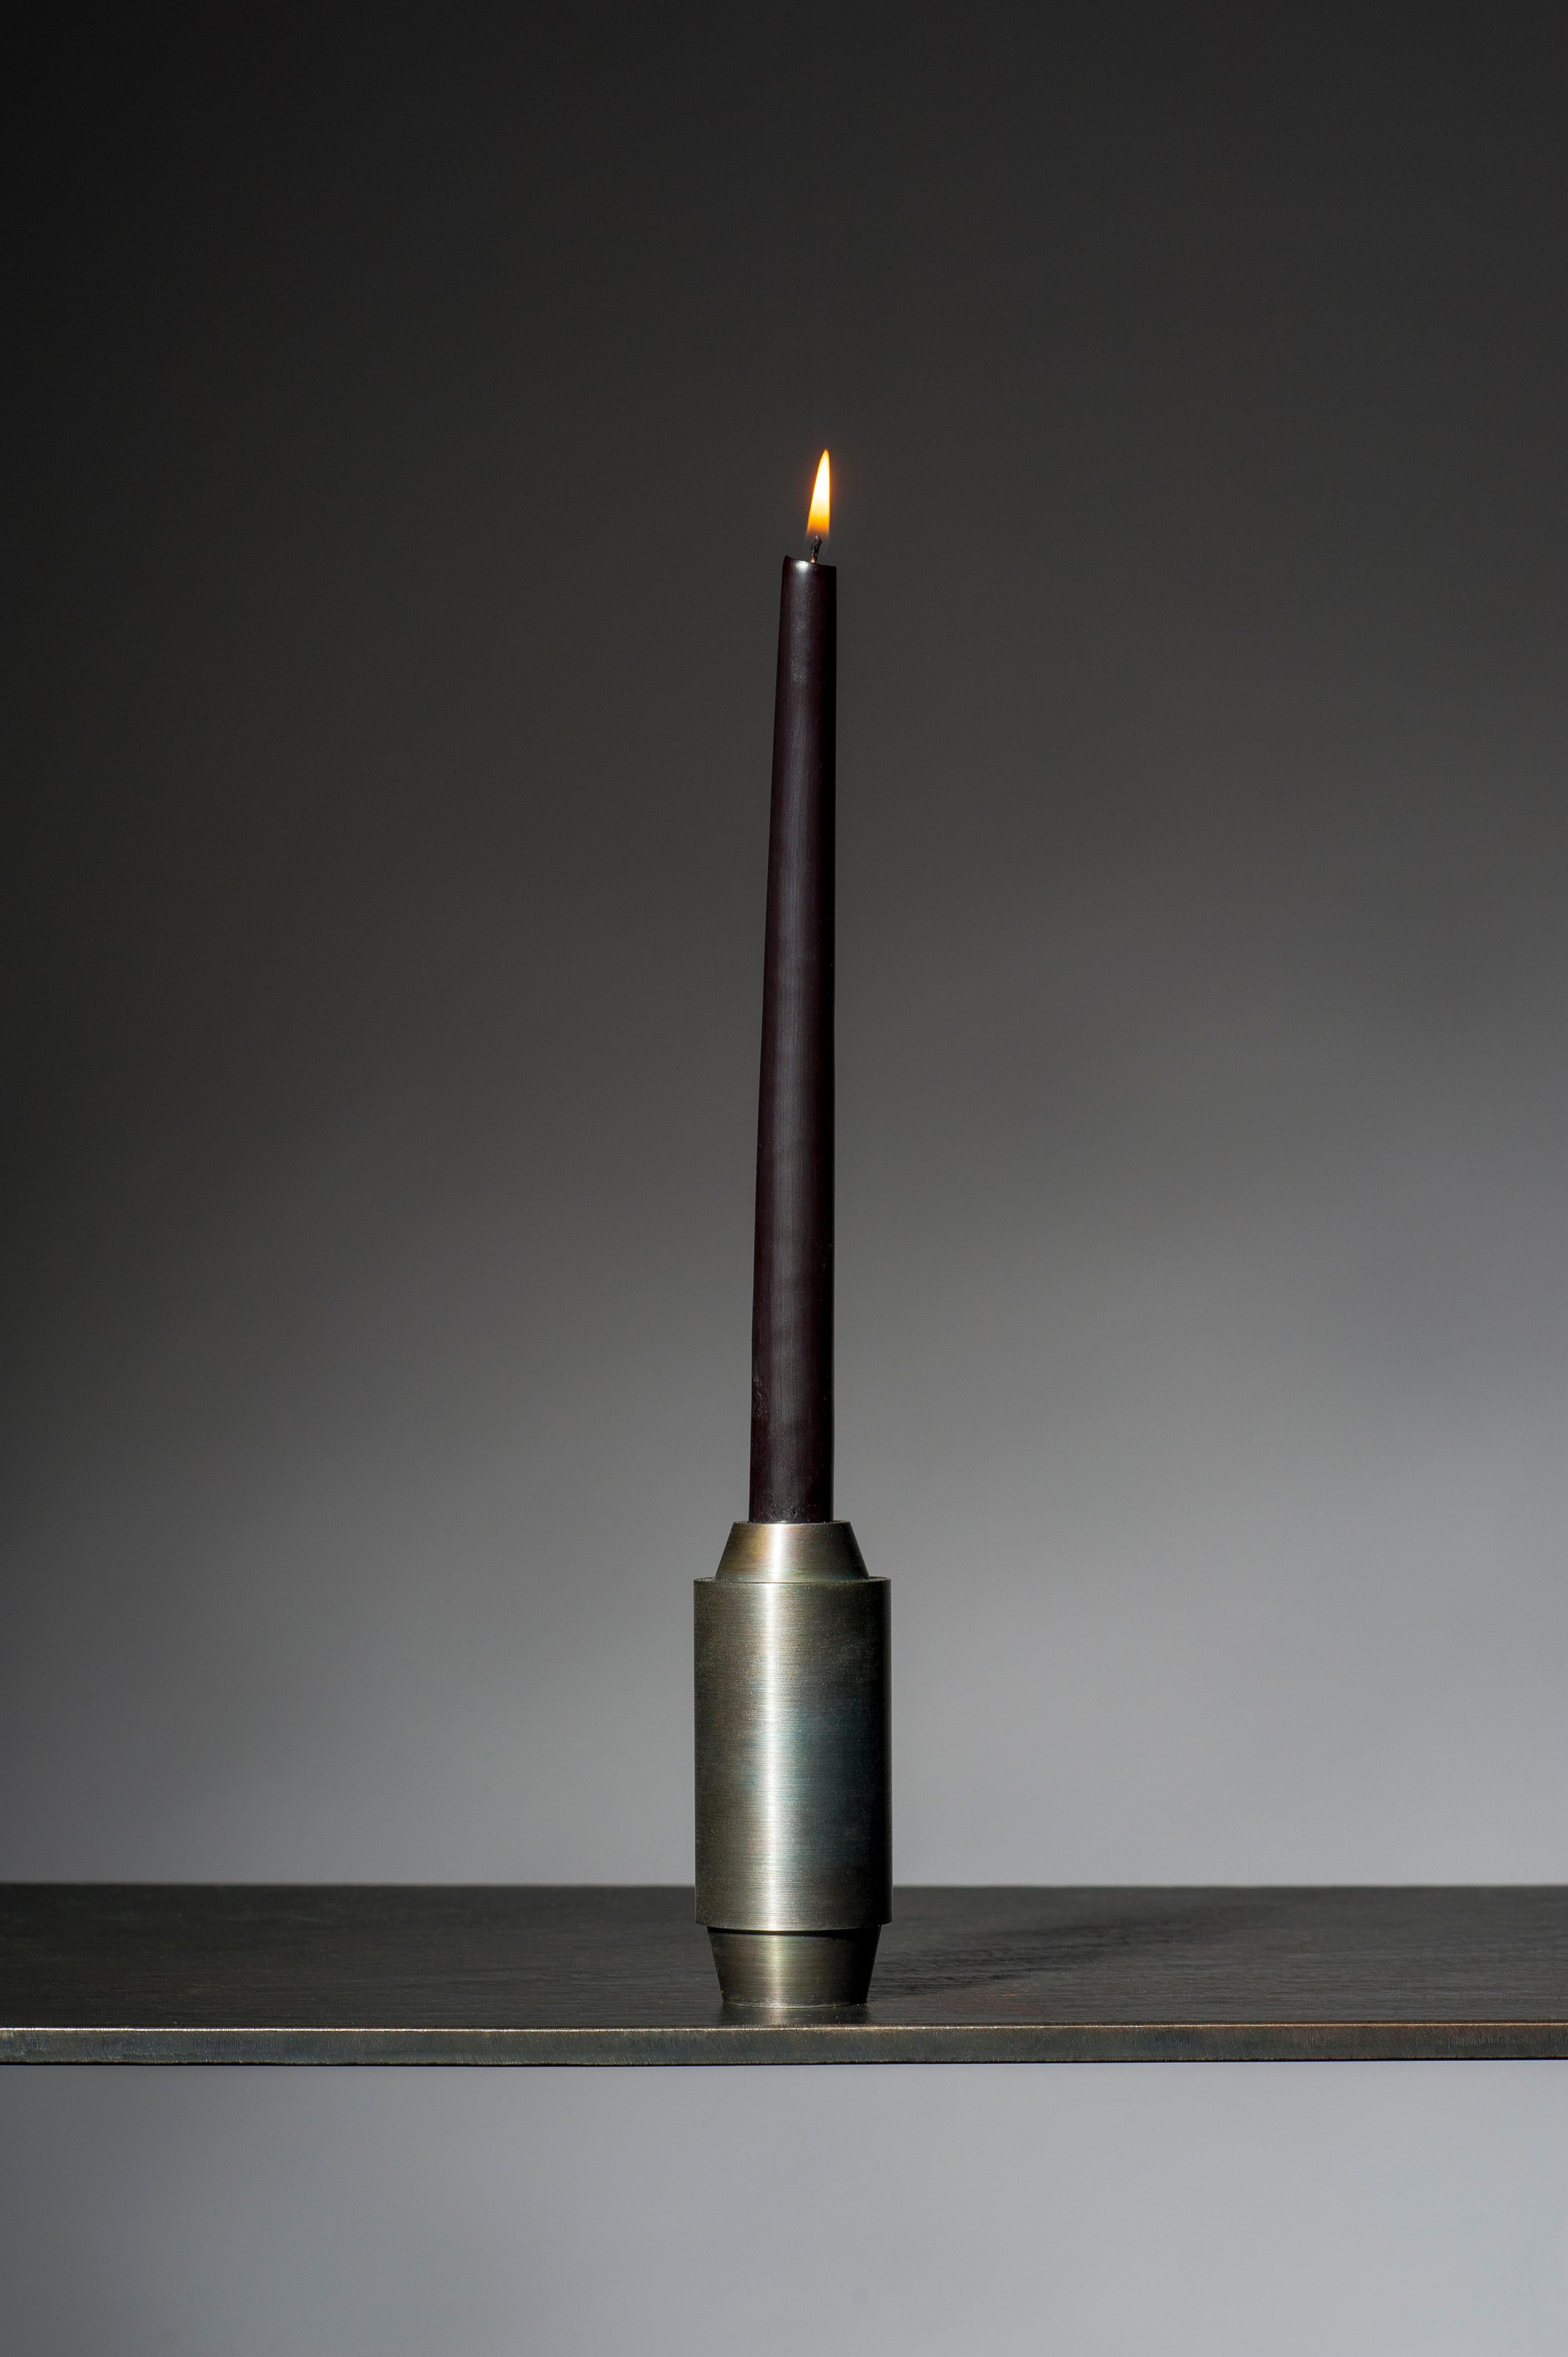 European Patina on Steel Candlestick by Lukasz Friedrich